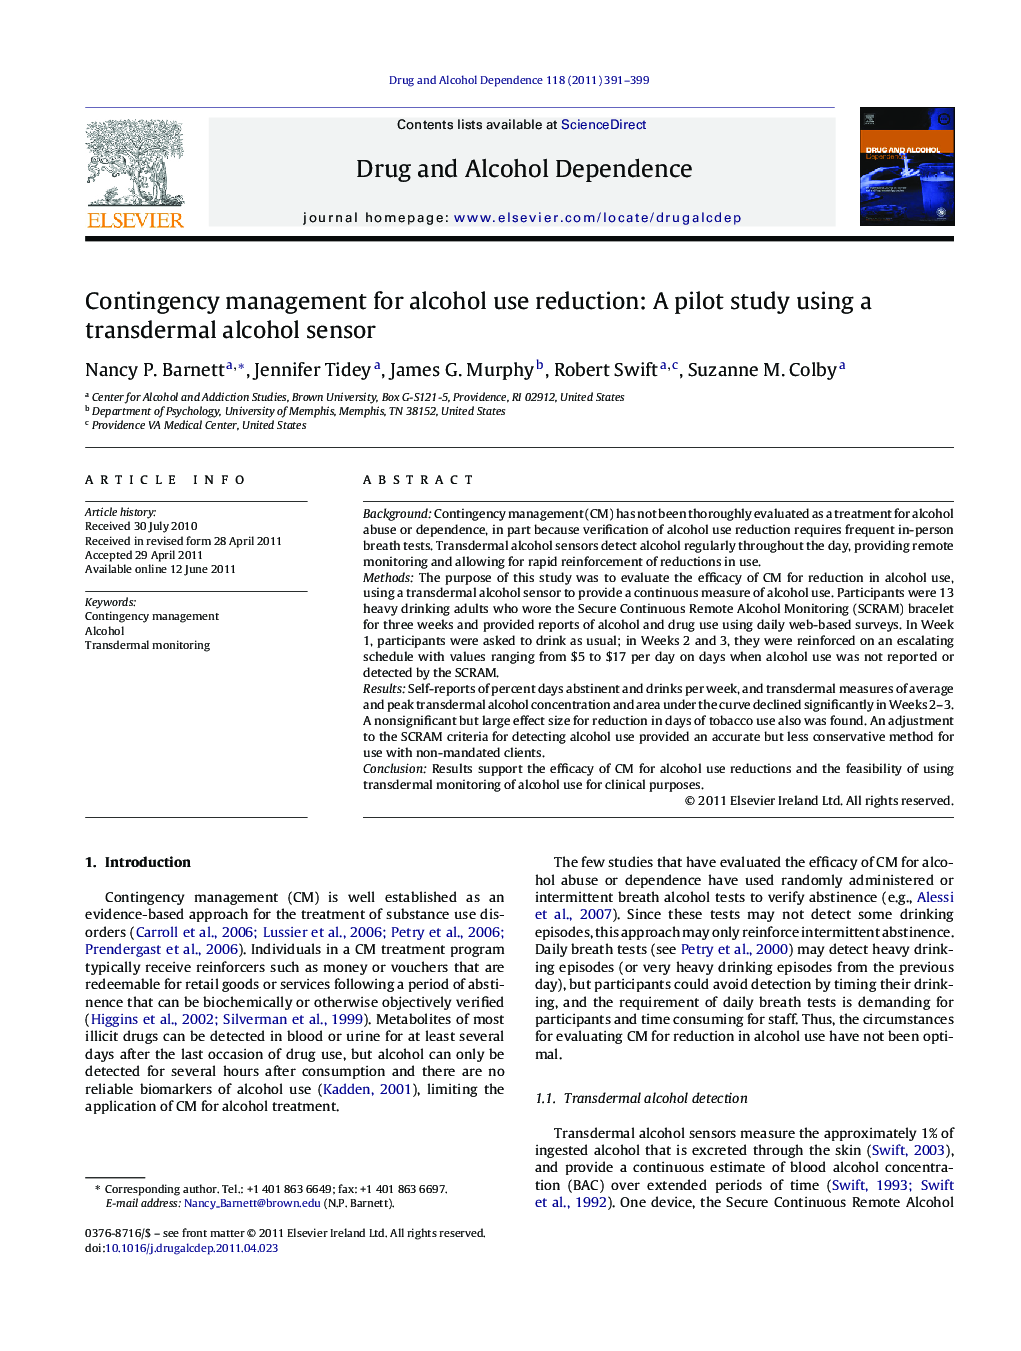 Contingency management for alcohol use reduction: A pilot study using a transdermal alcohol sensor